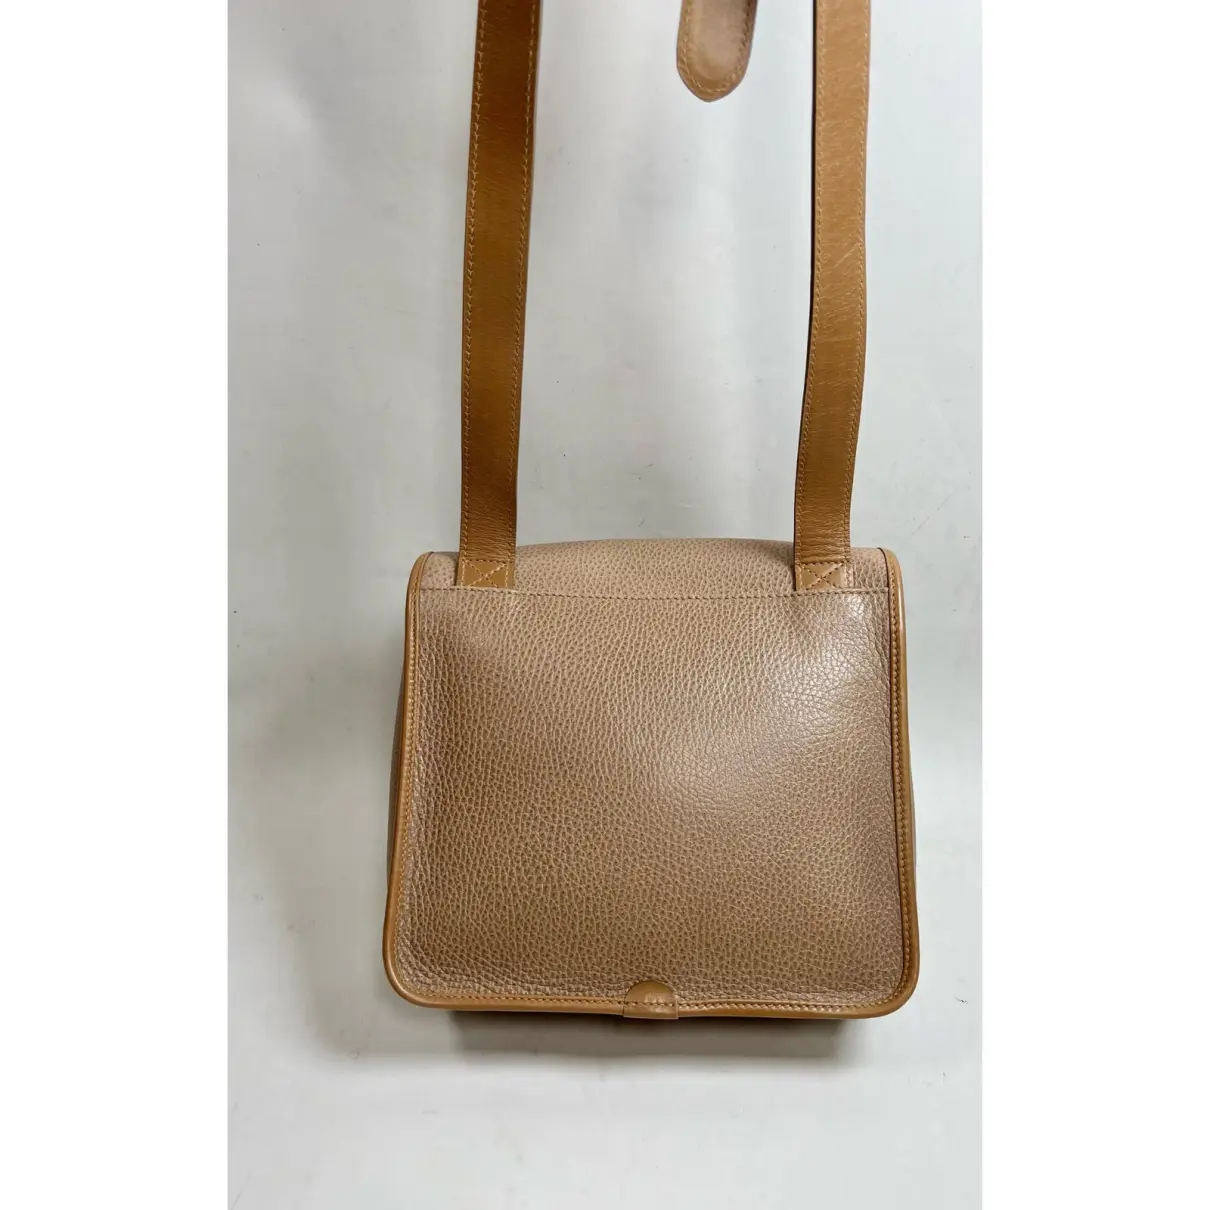 Buy Mark Cross Leather crossbody bag online